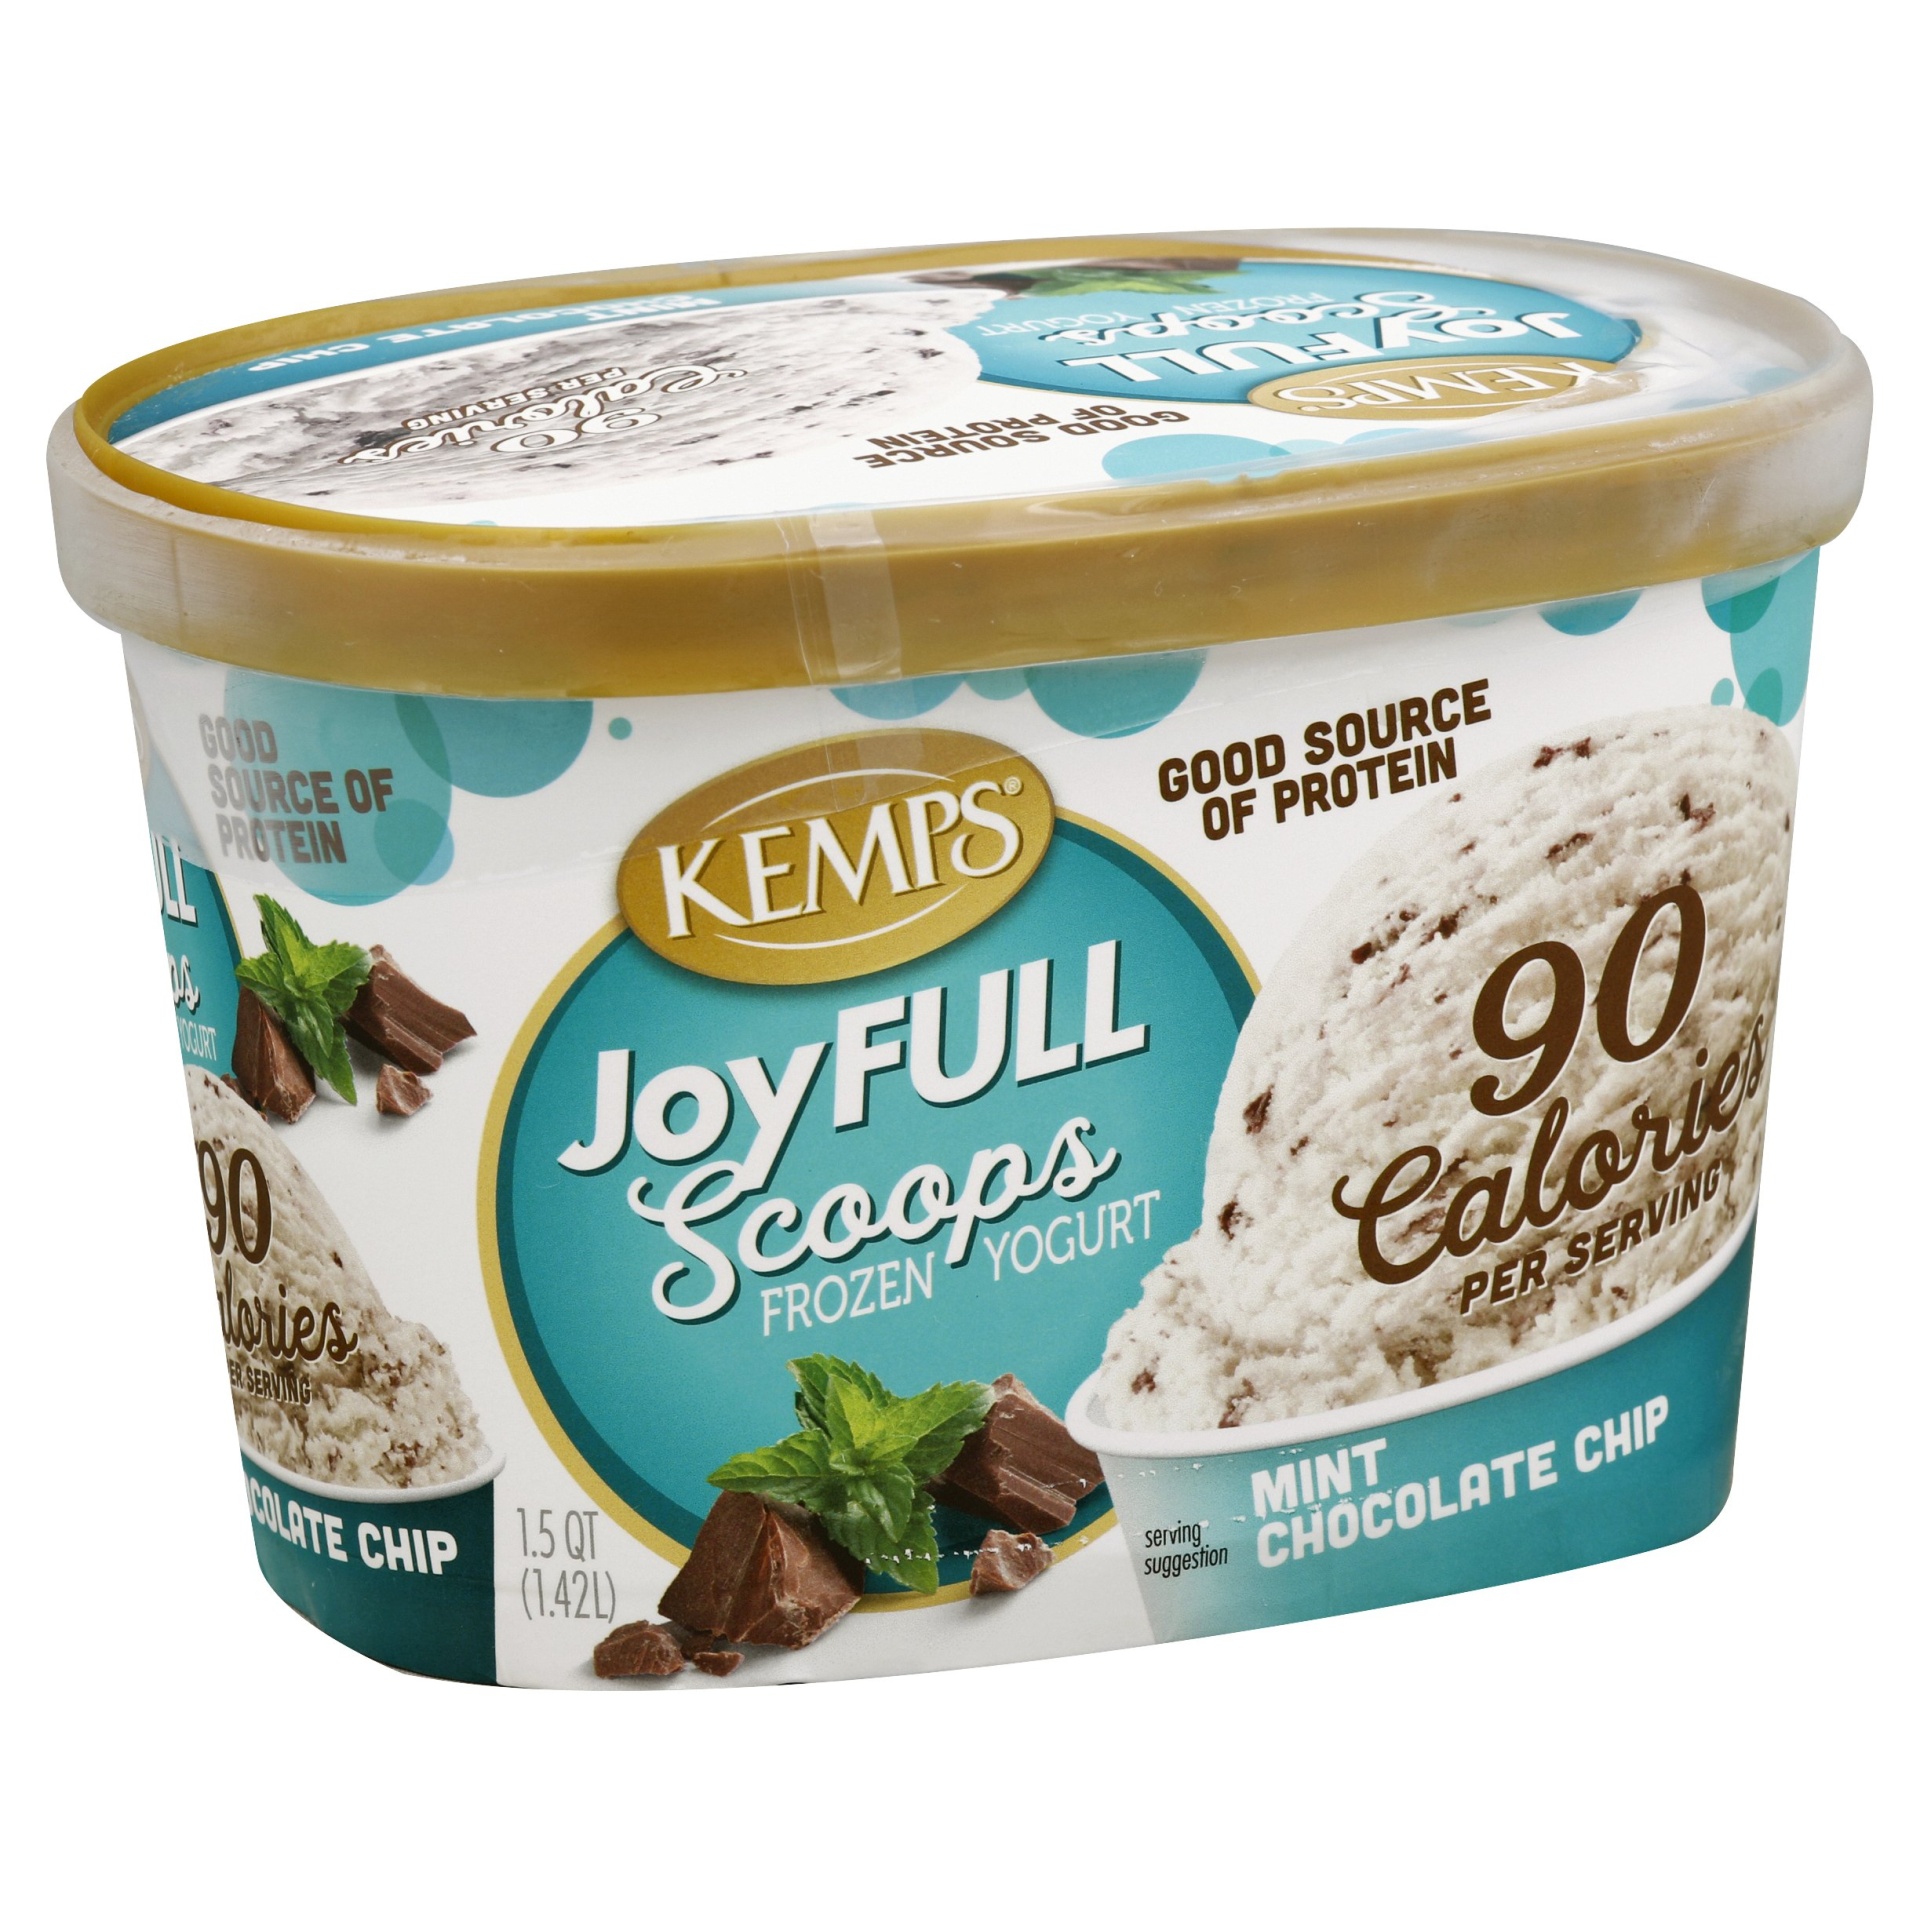 slide 1 of 1, Kemps JoyFULL Scoops Mint Chocolate Chip Frozen Yogurt, 1.5 qt